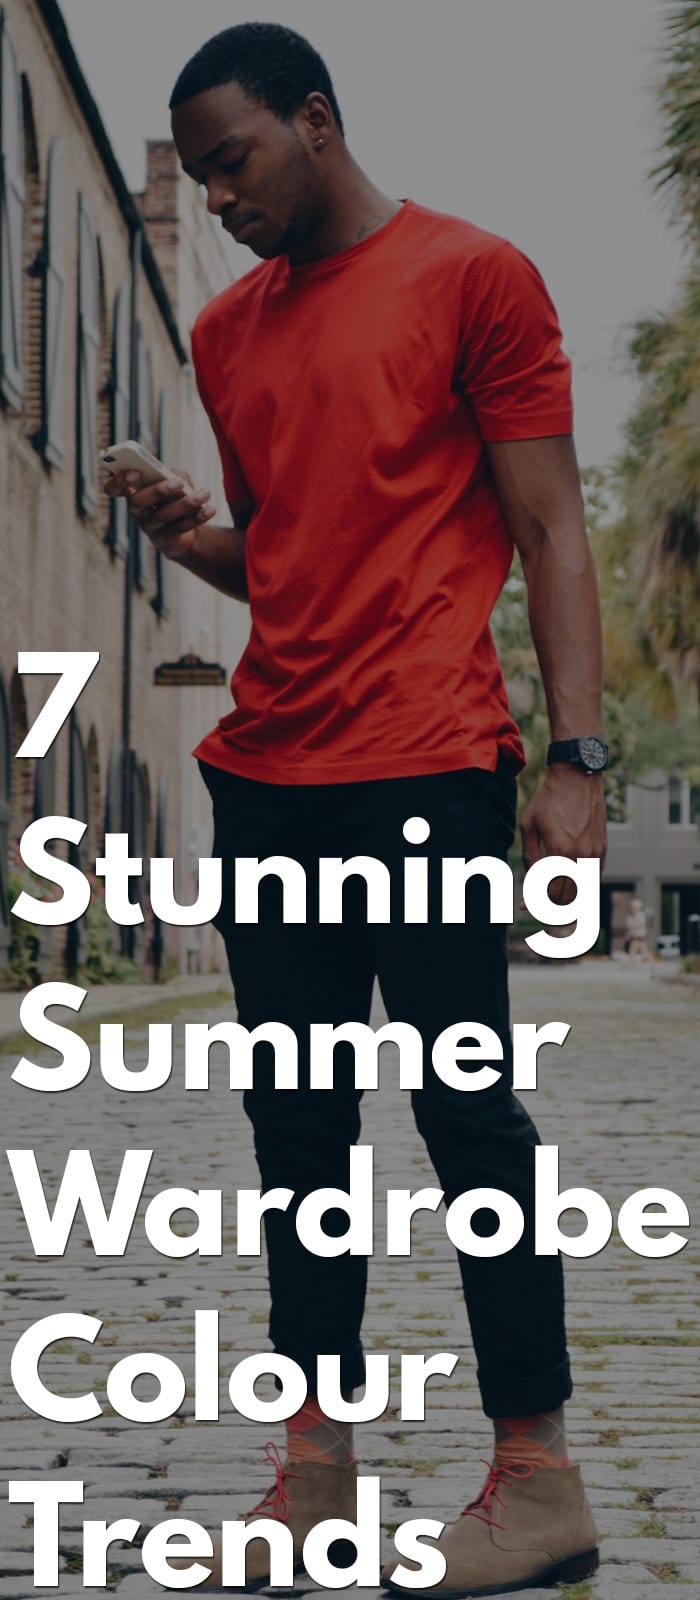 7 Stunning Summer Wardrobe Colour Trends